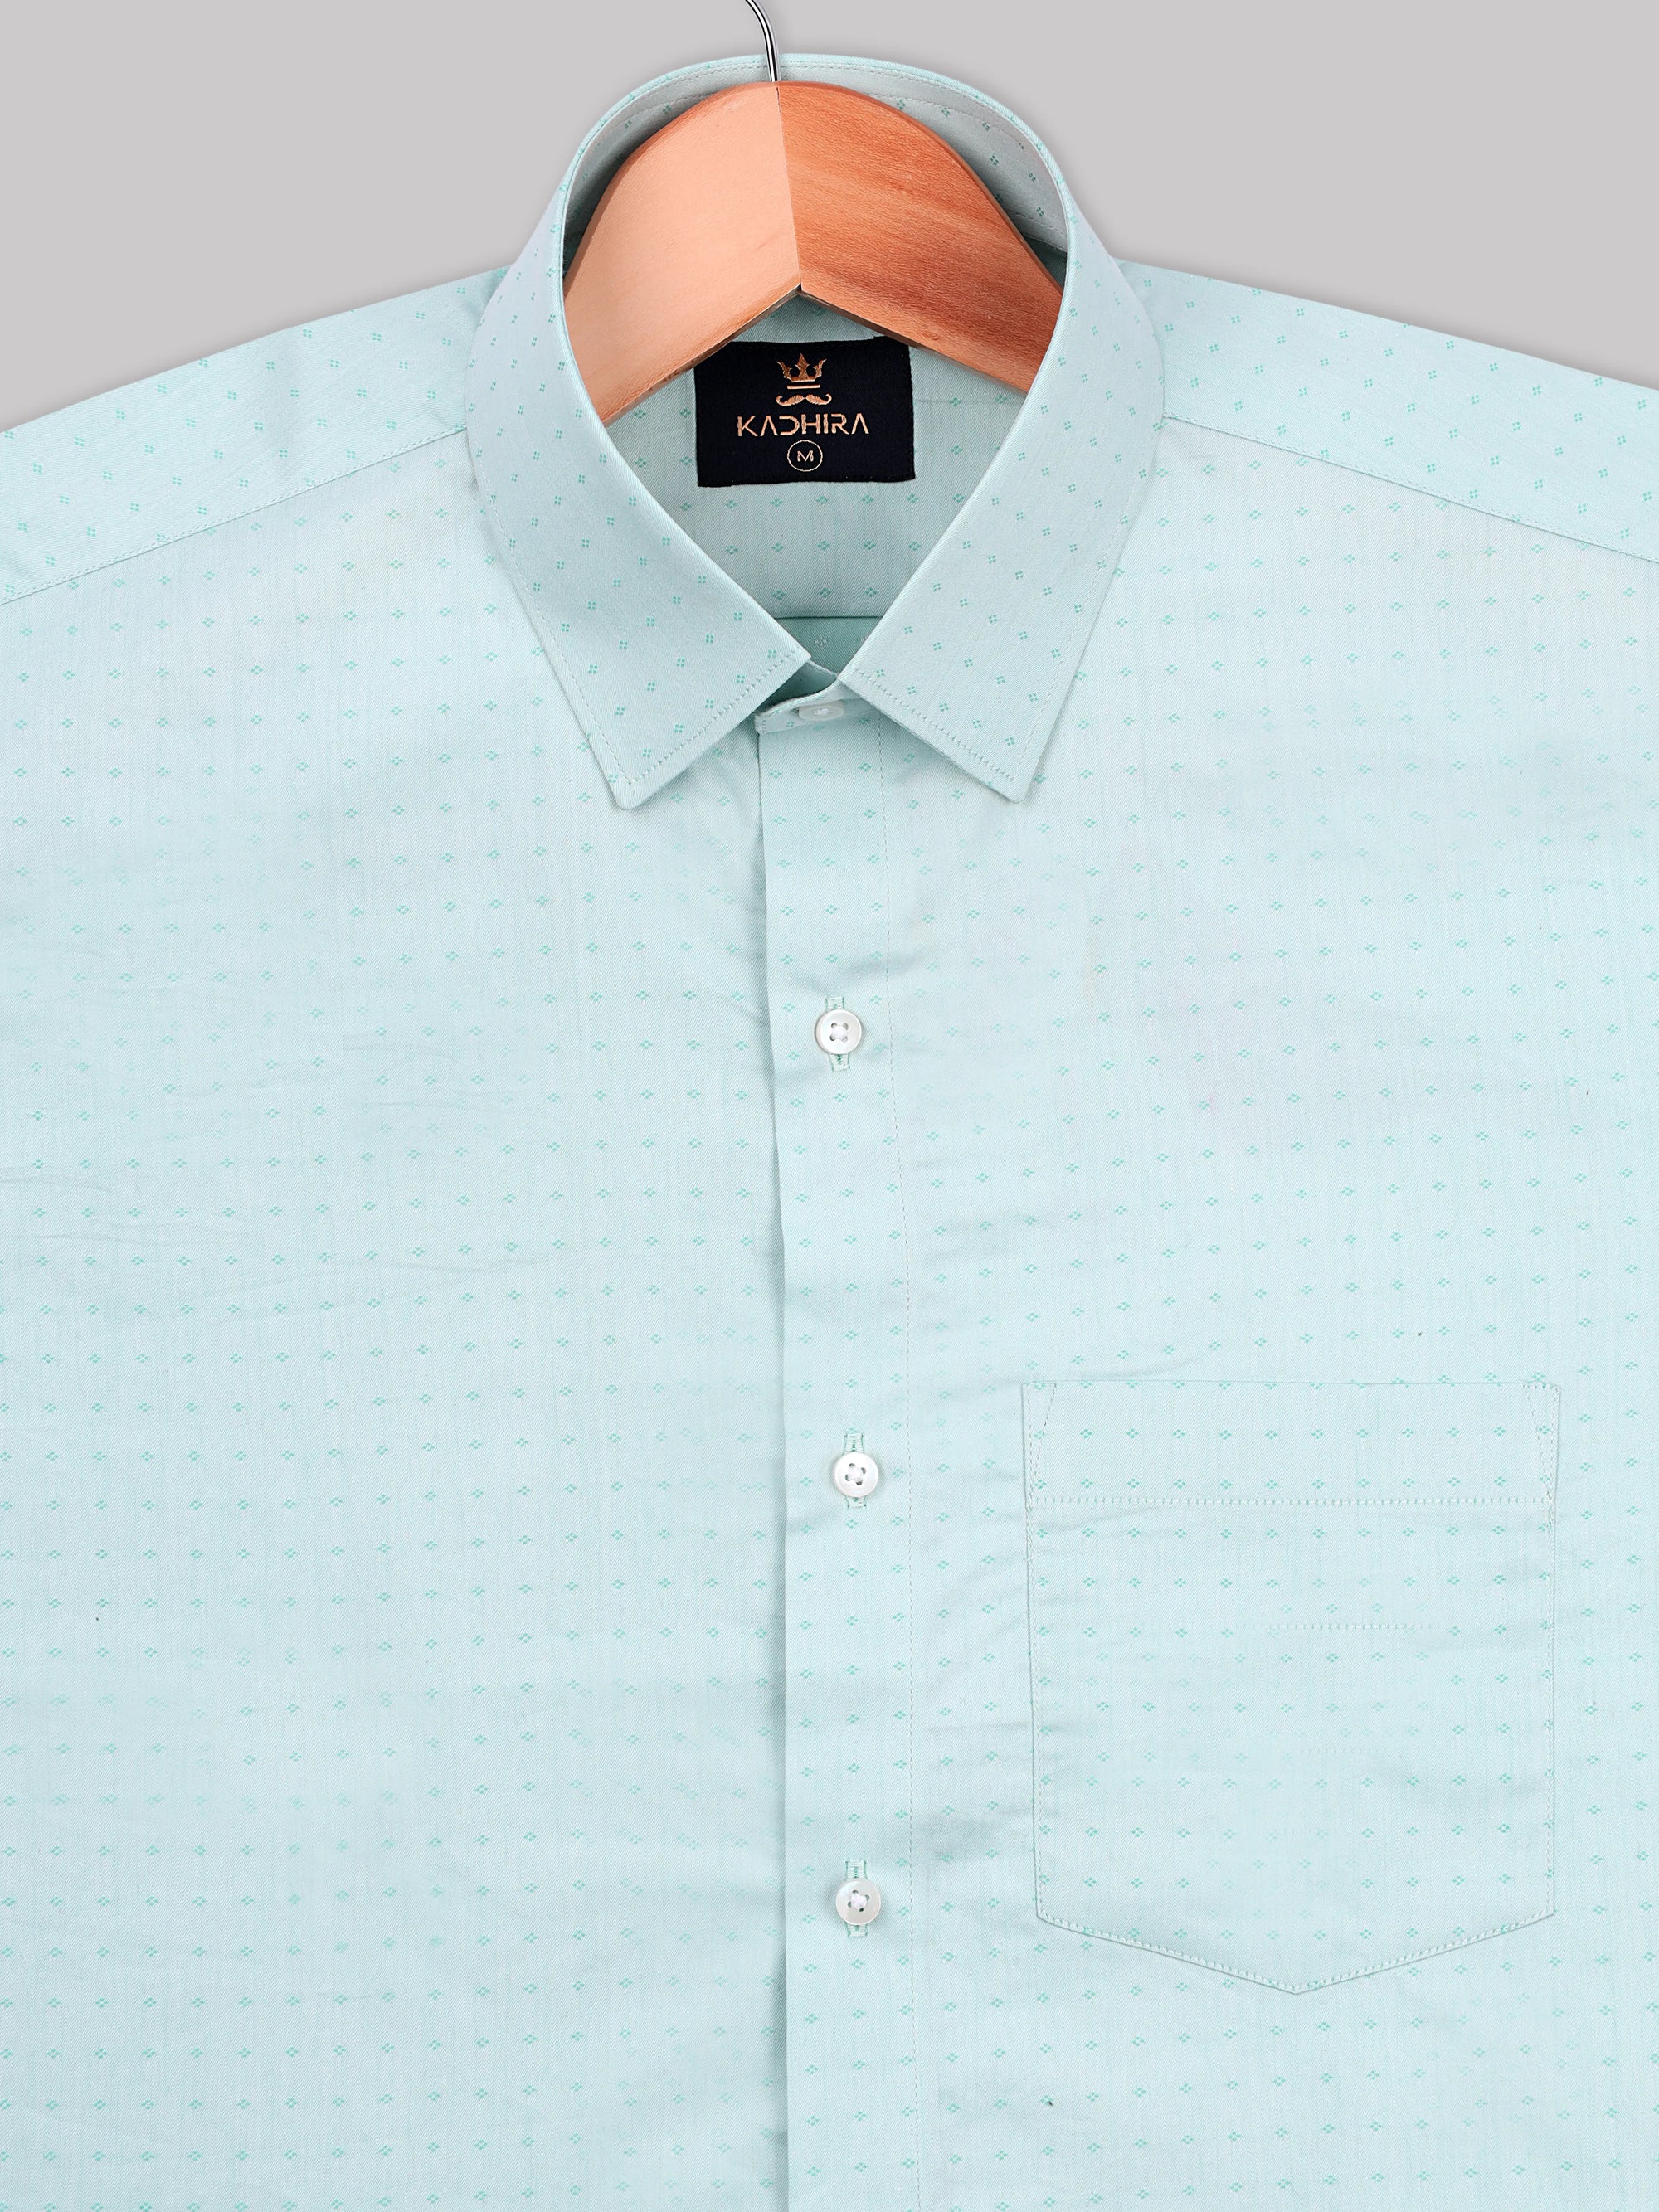 Powder Blue Dobby Textured Jacquard Cotton Shirt